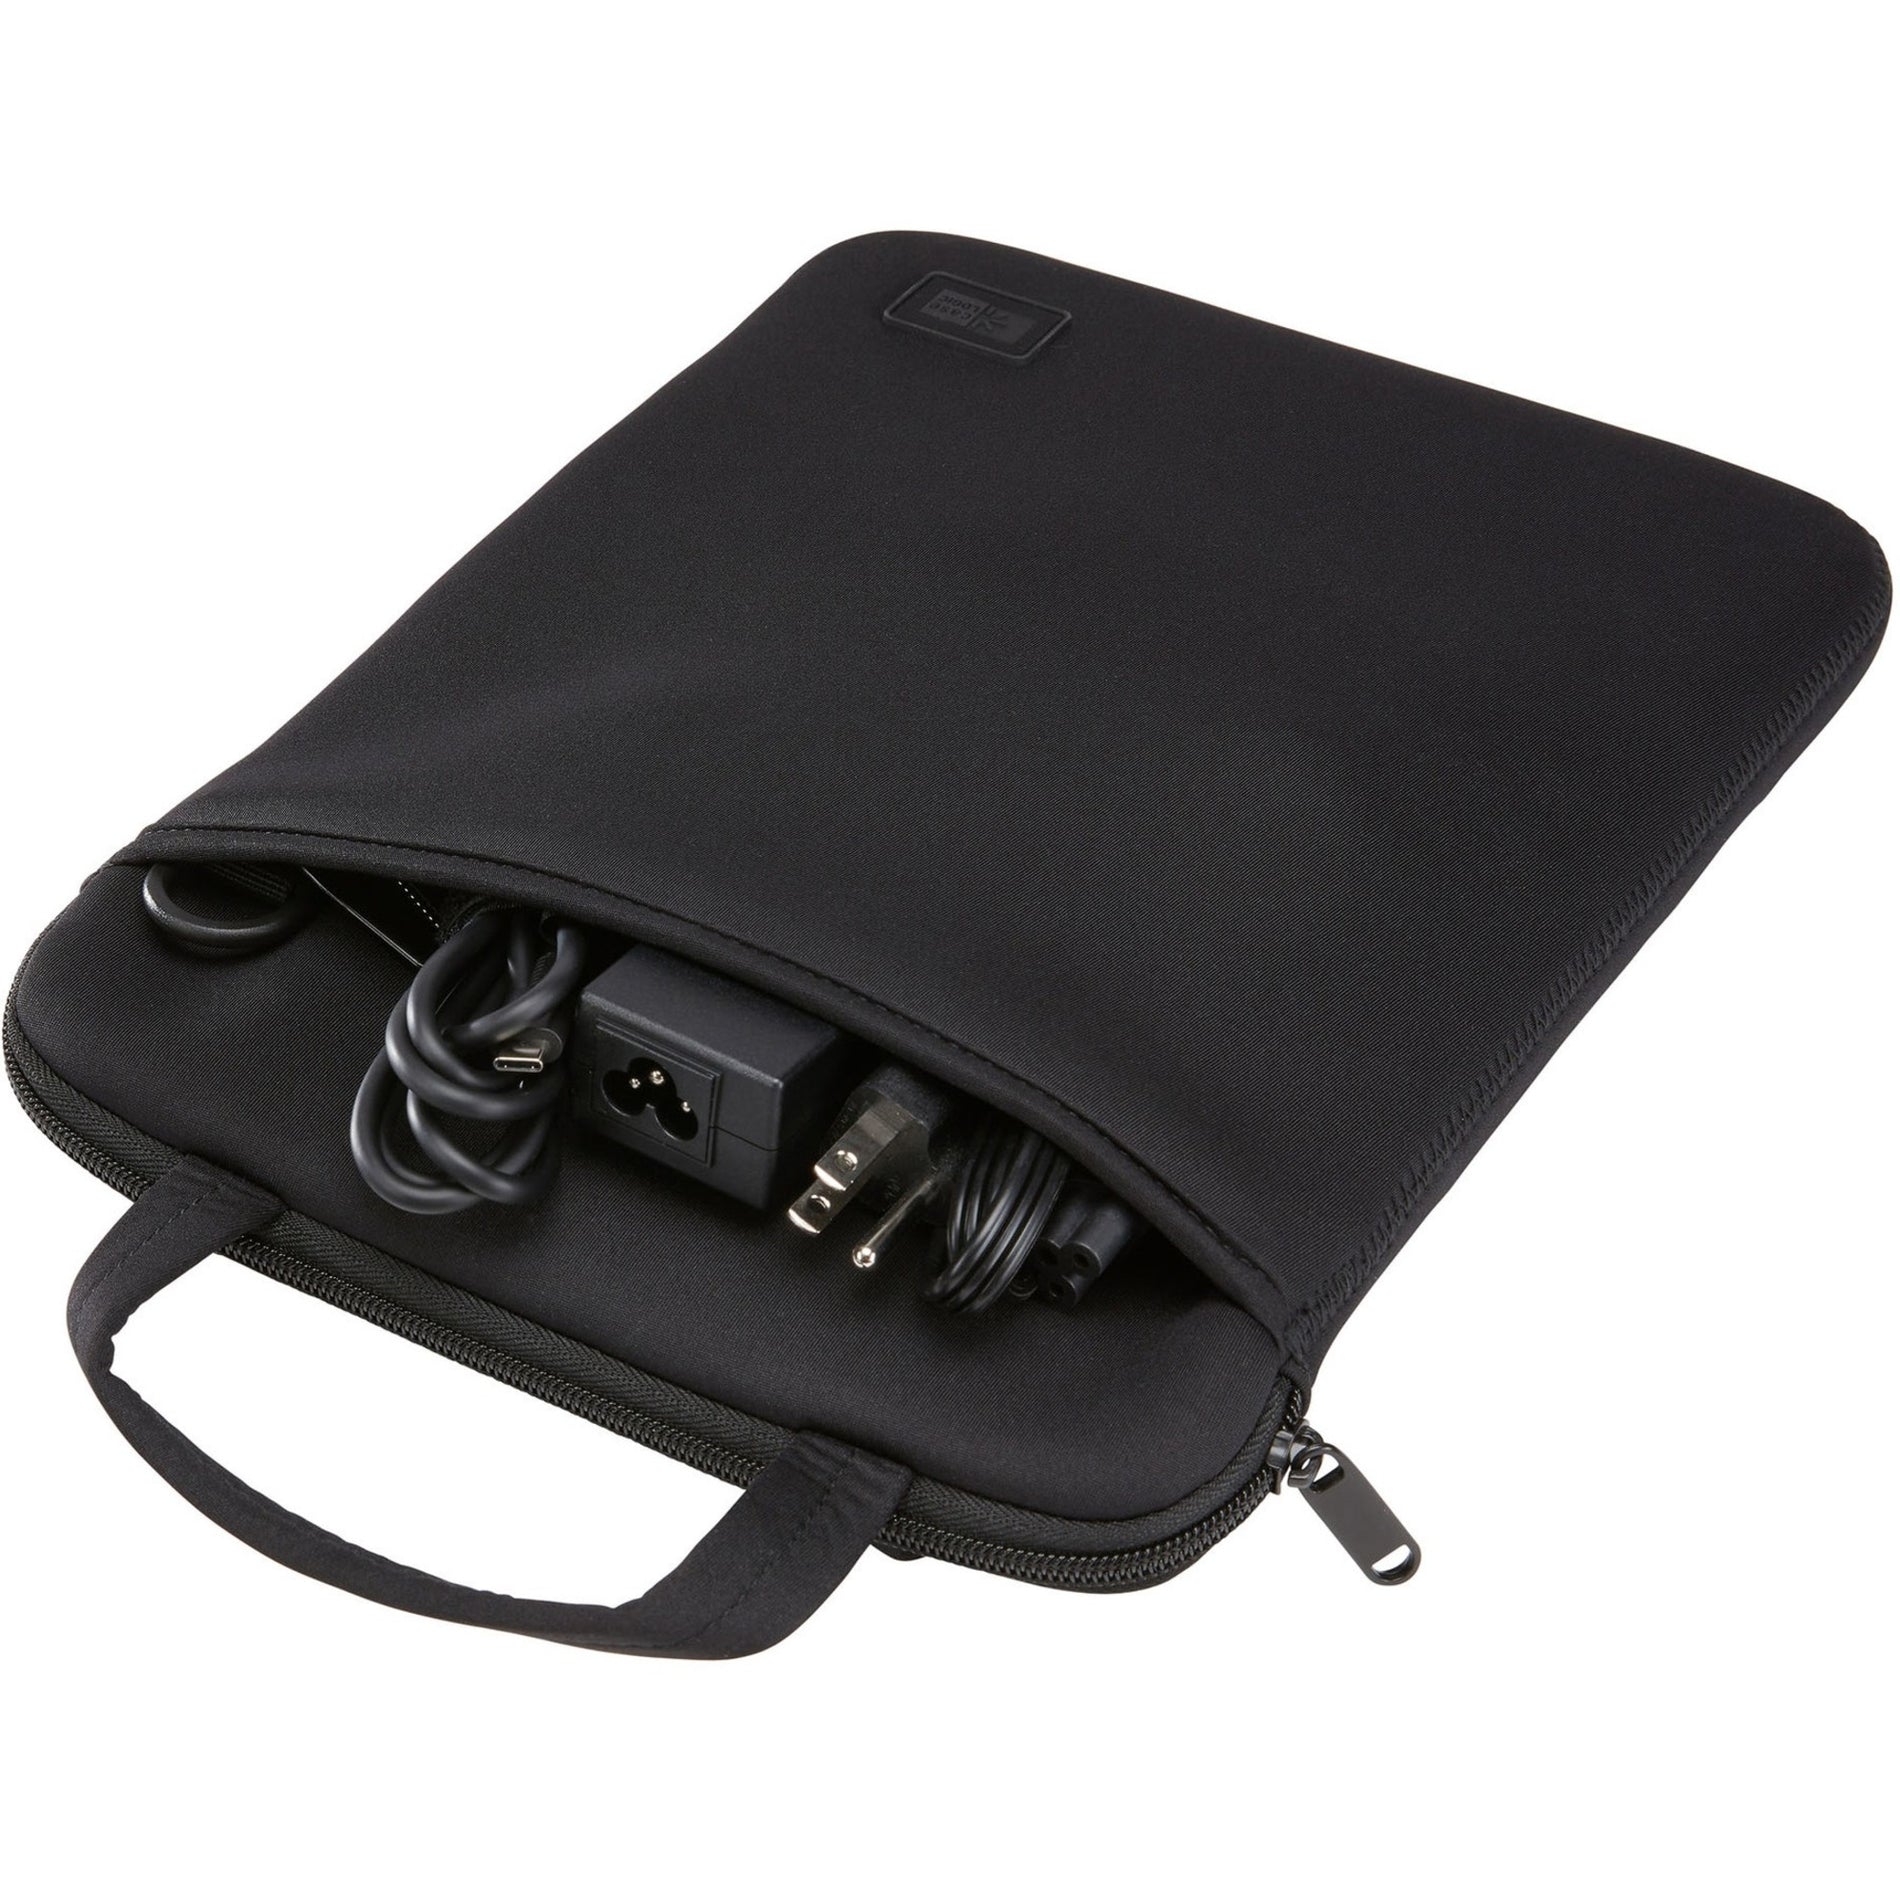 Case Logic 3204680 Quantic 12" Chromebook Sleeve, Black, Limited Warranty 25 Year